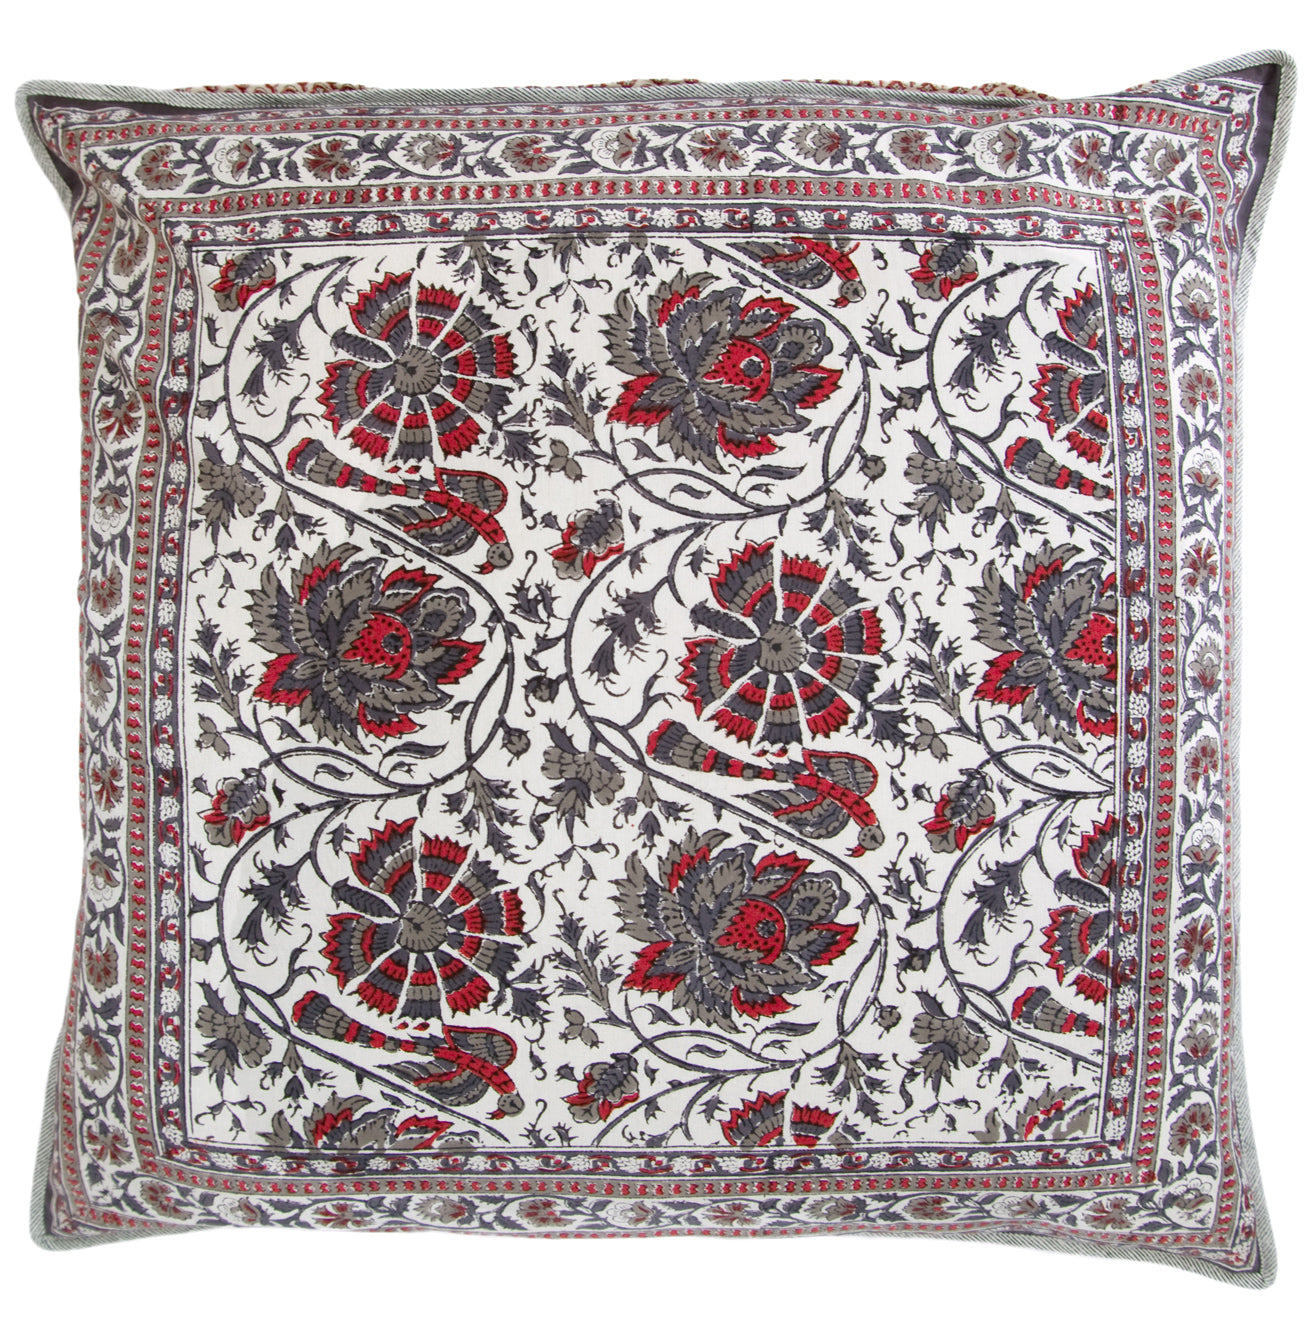 Anokhi USA - Cushion Covers in Guinea Hen